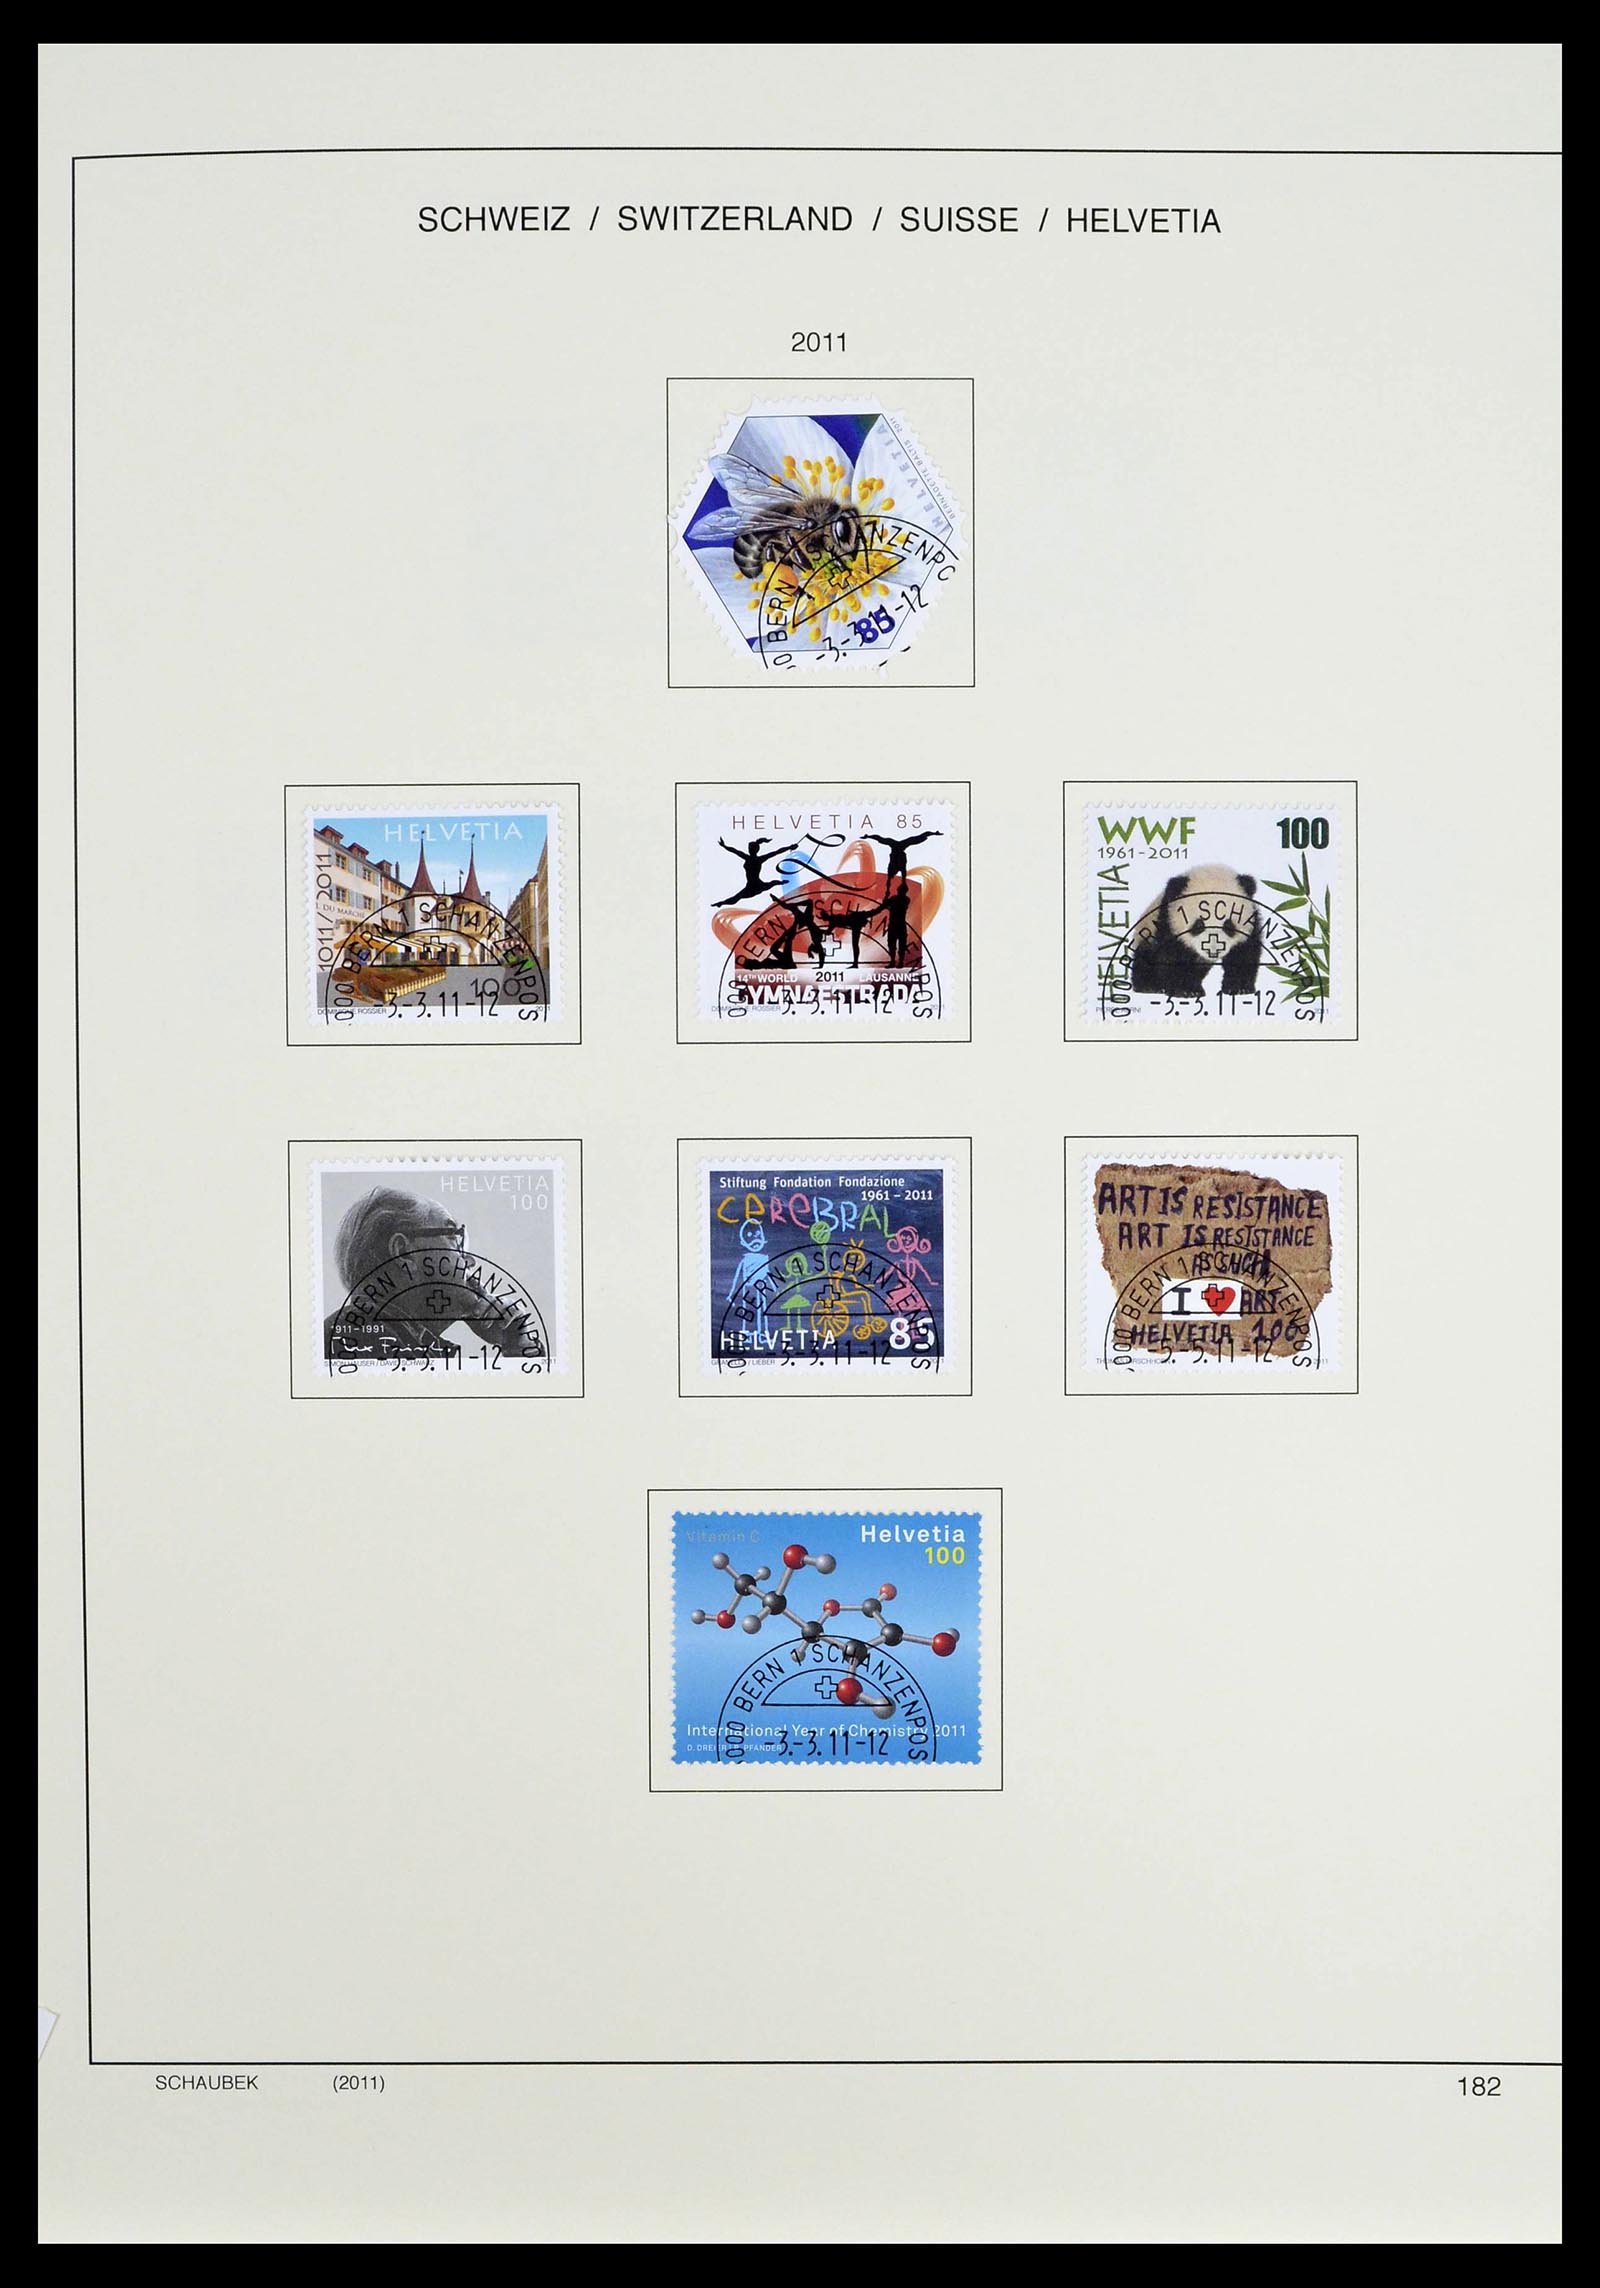 39322 0122 - Stamp collection 39322 Switzerland 1980-2011.